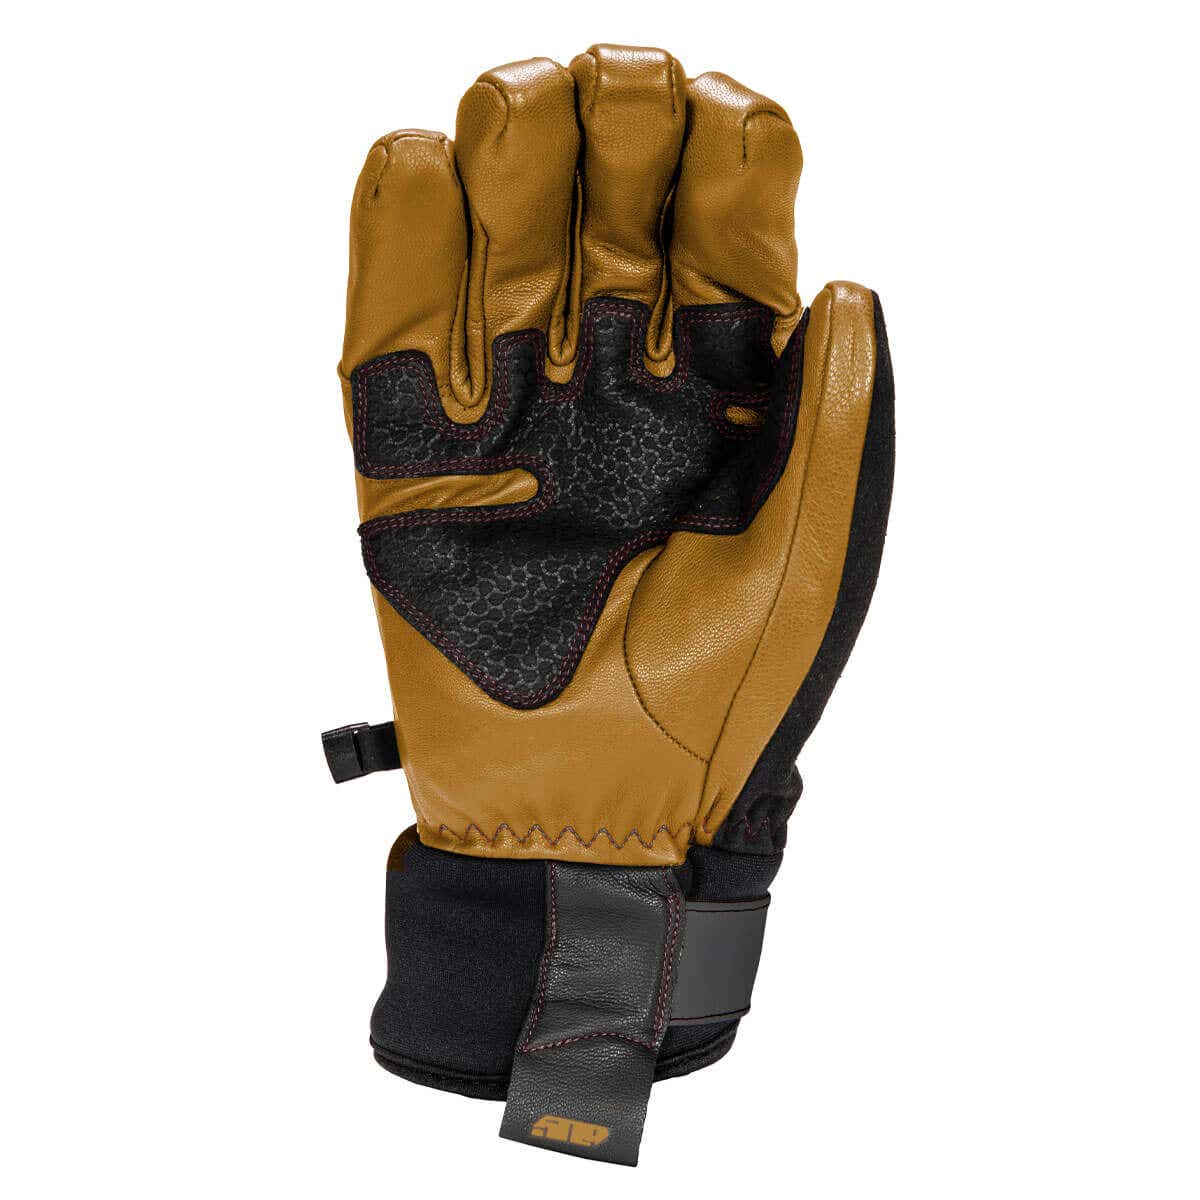 509 Free Range Gloves